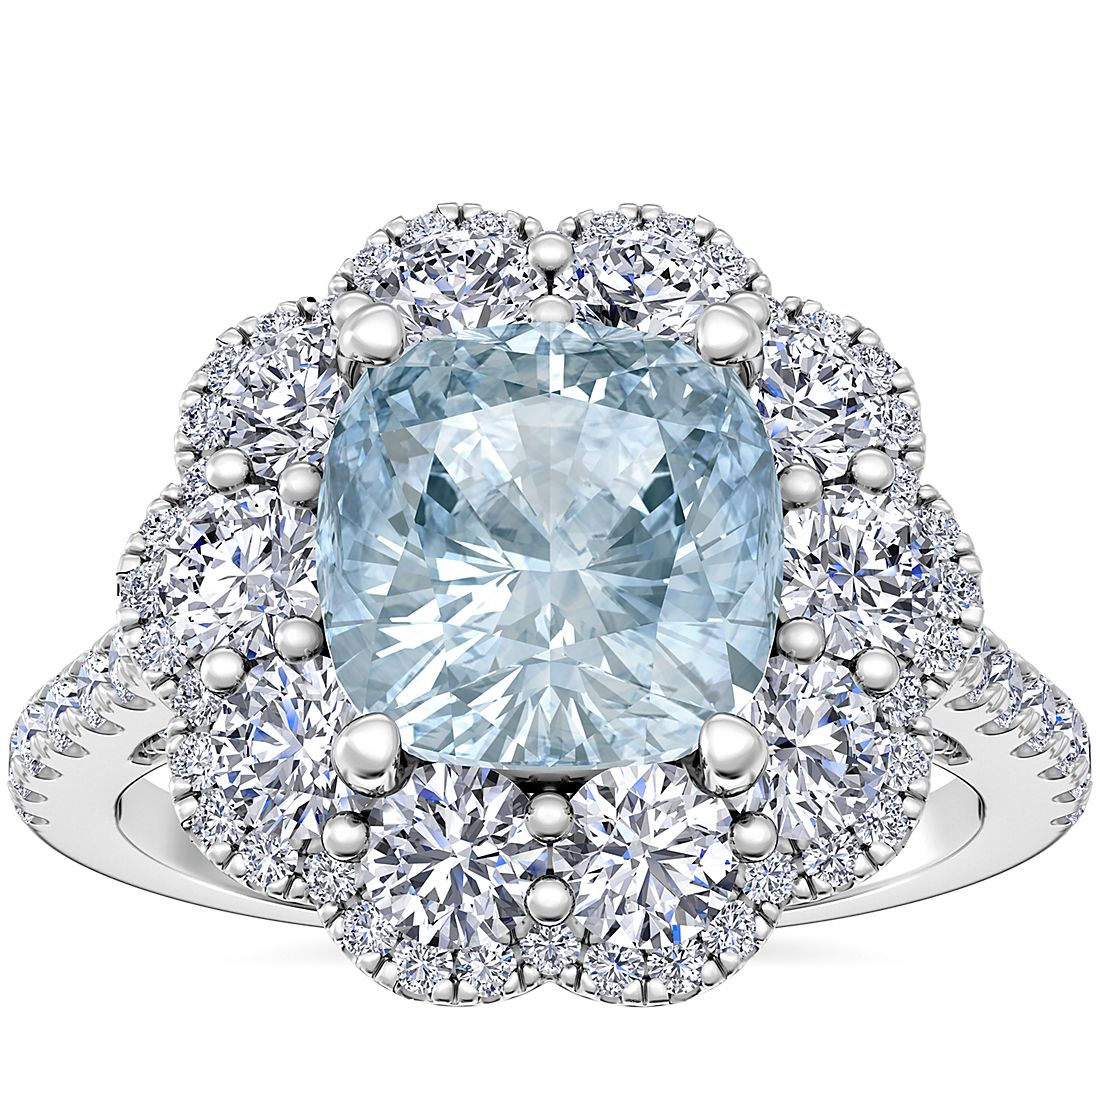 Vintage Diamond Halo Engagement Ring with Cushion Aquamarine in Platinum (8mm)